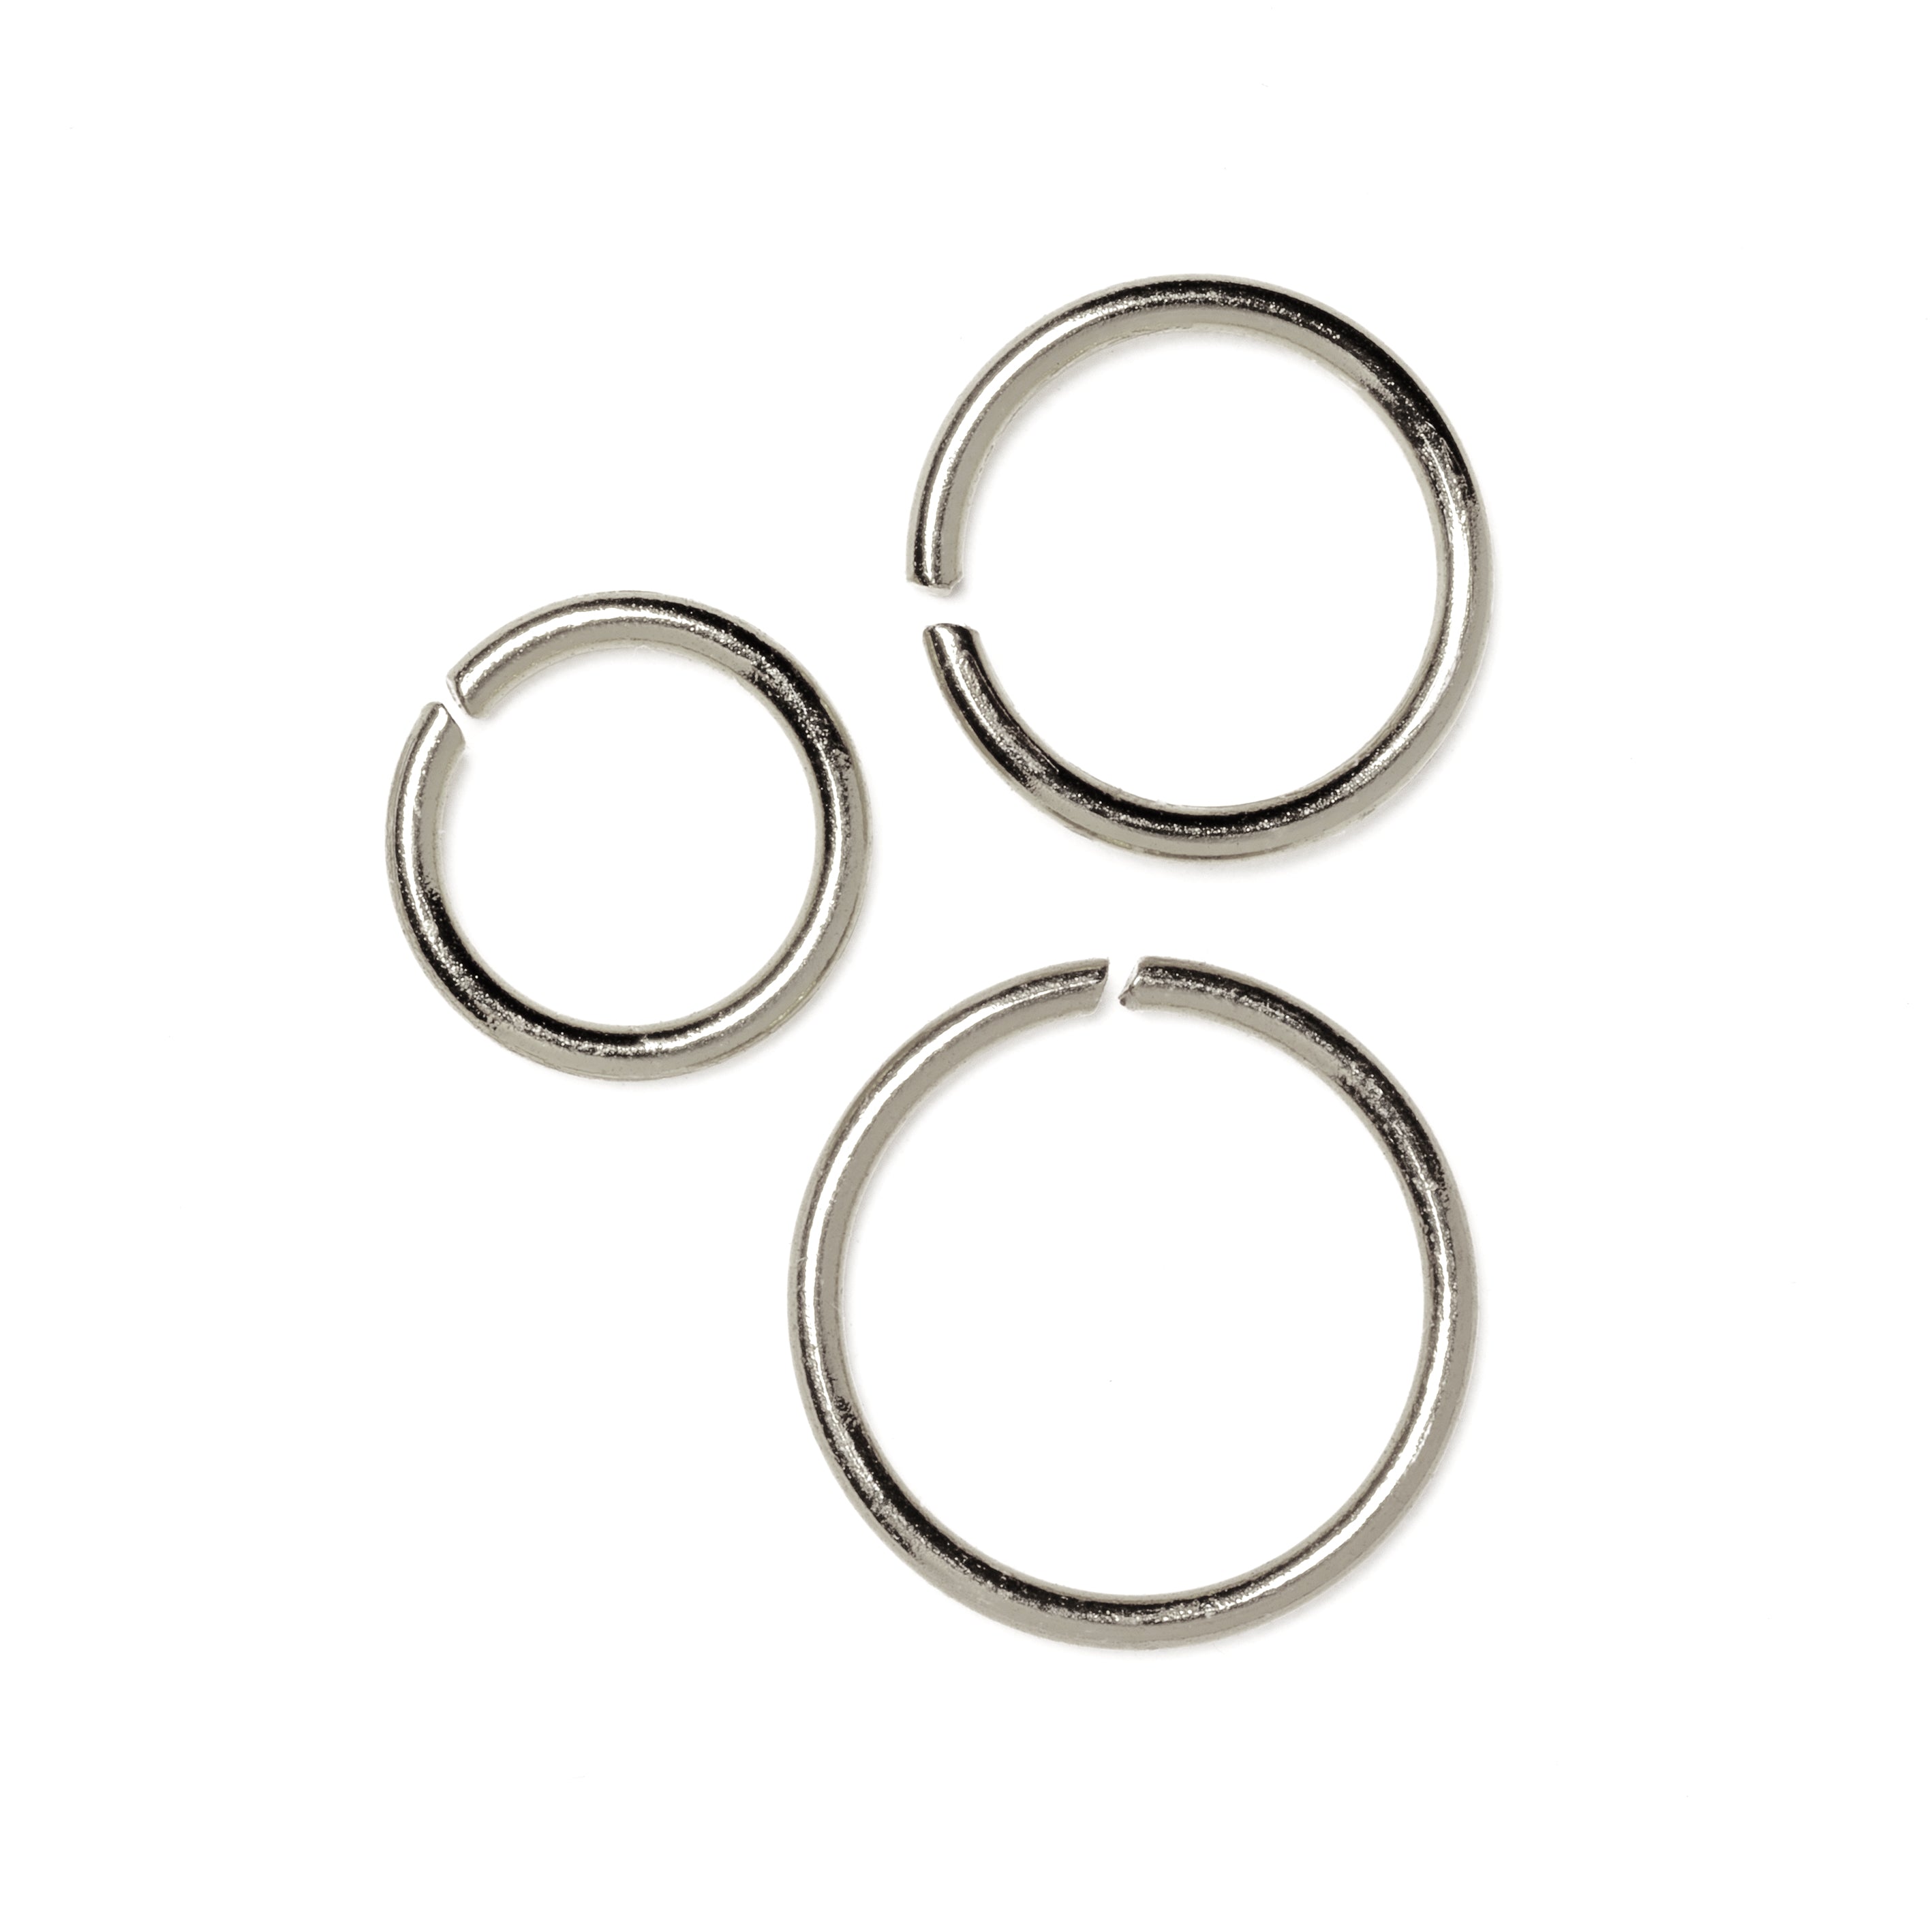 6mm, 8mm, 10mm 0.8mm/20g silver seamless piercing rings